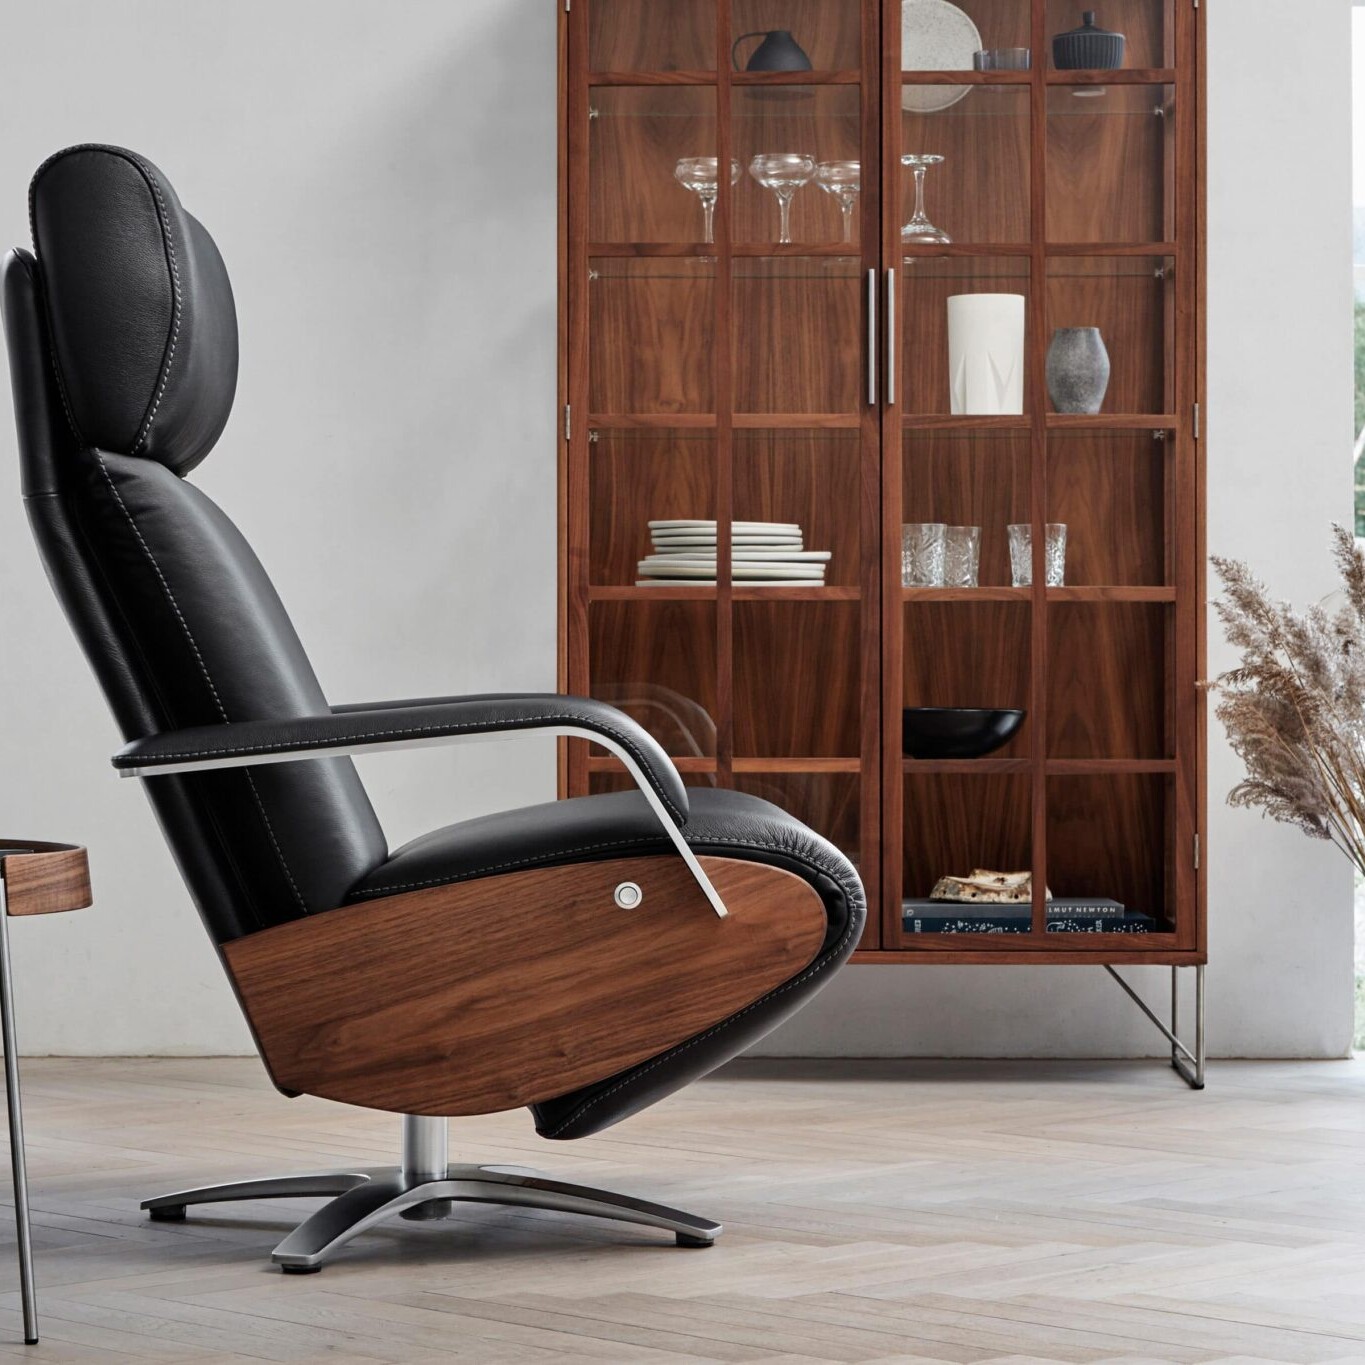 Hemelaer-Interior-Berg-Furniture-Berg Coda Relax 1-3600x2400-1